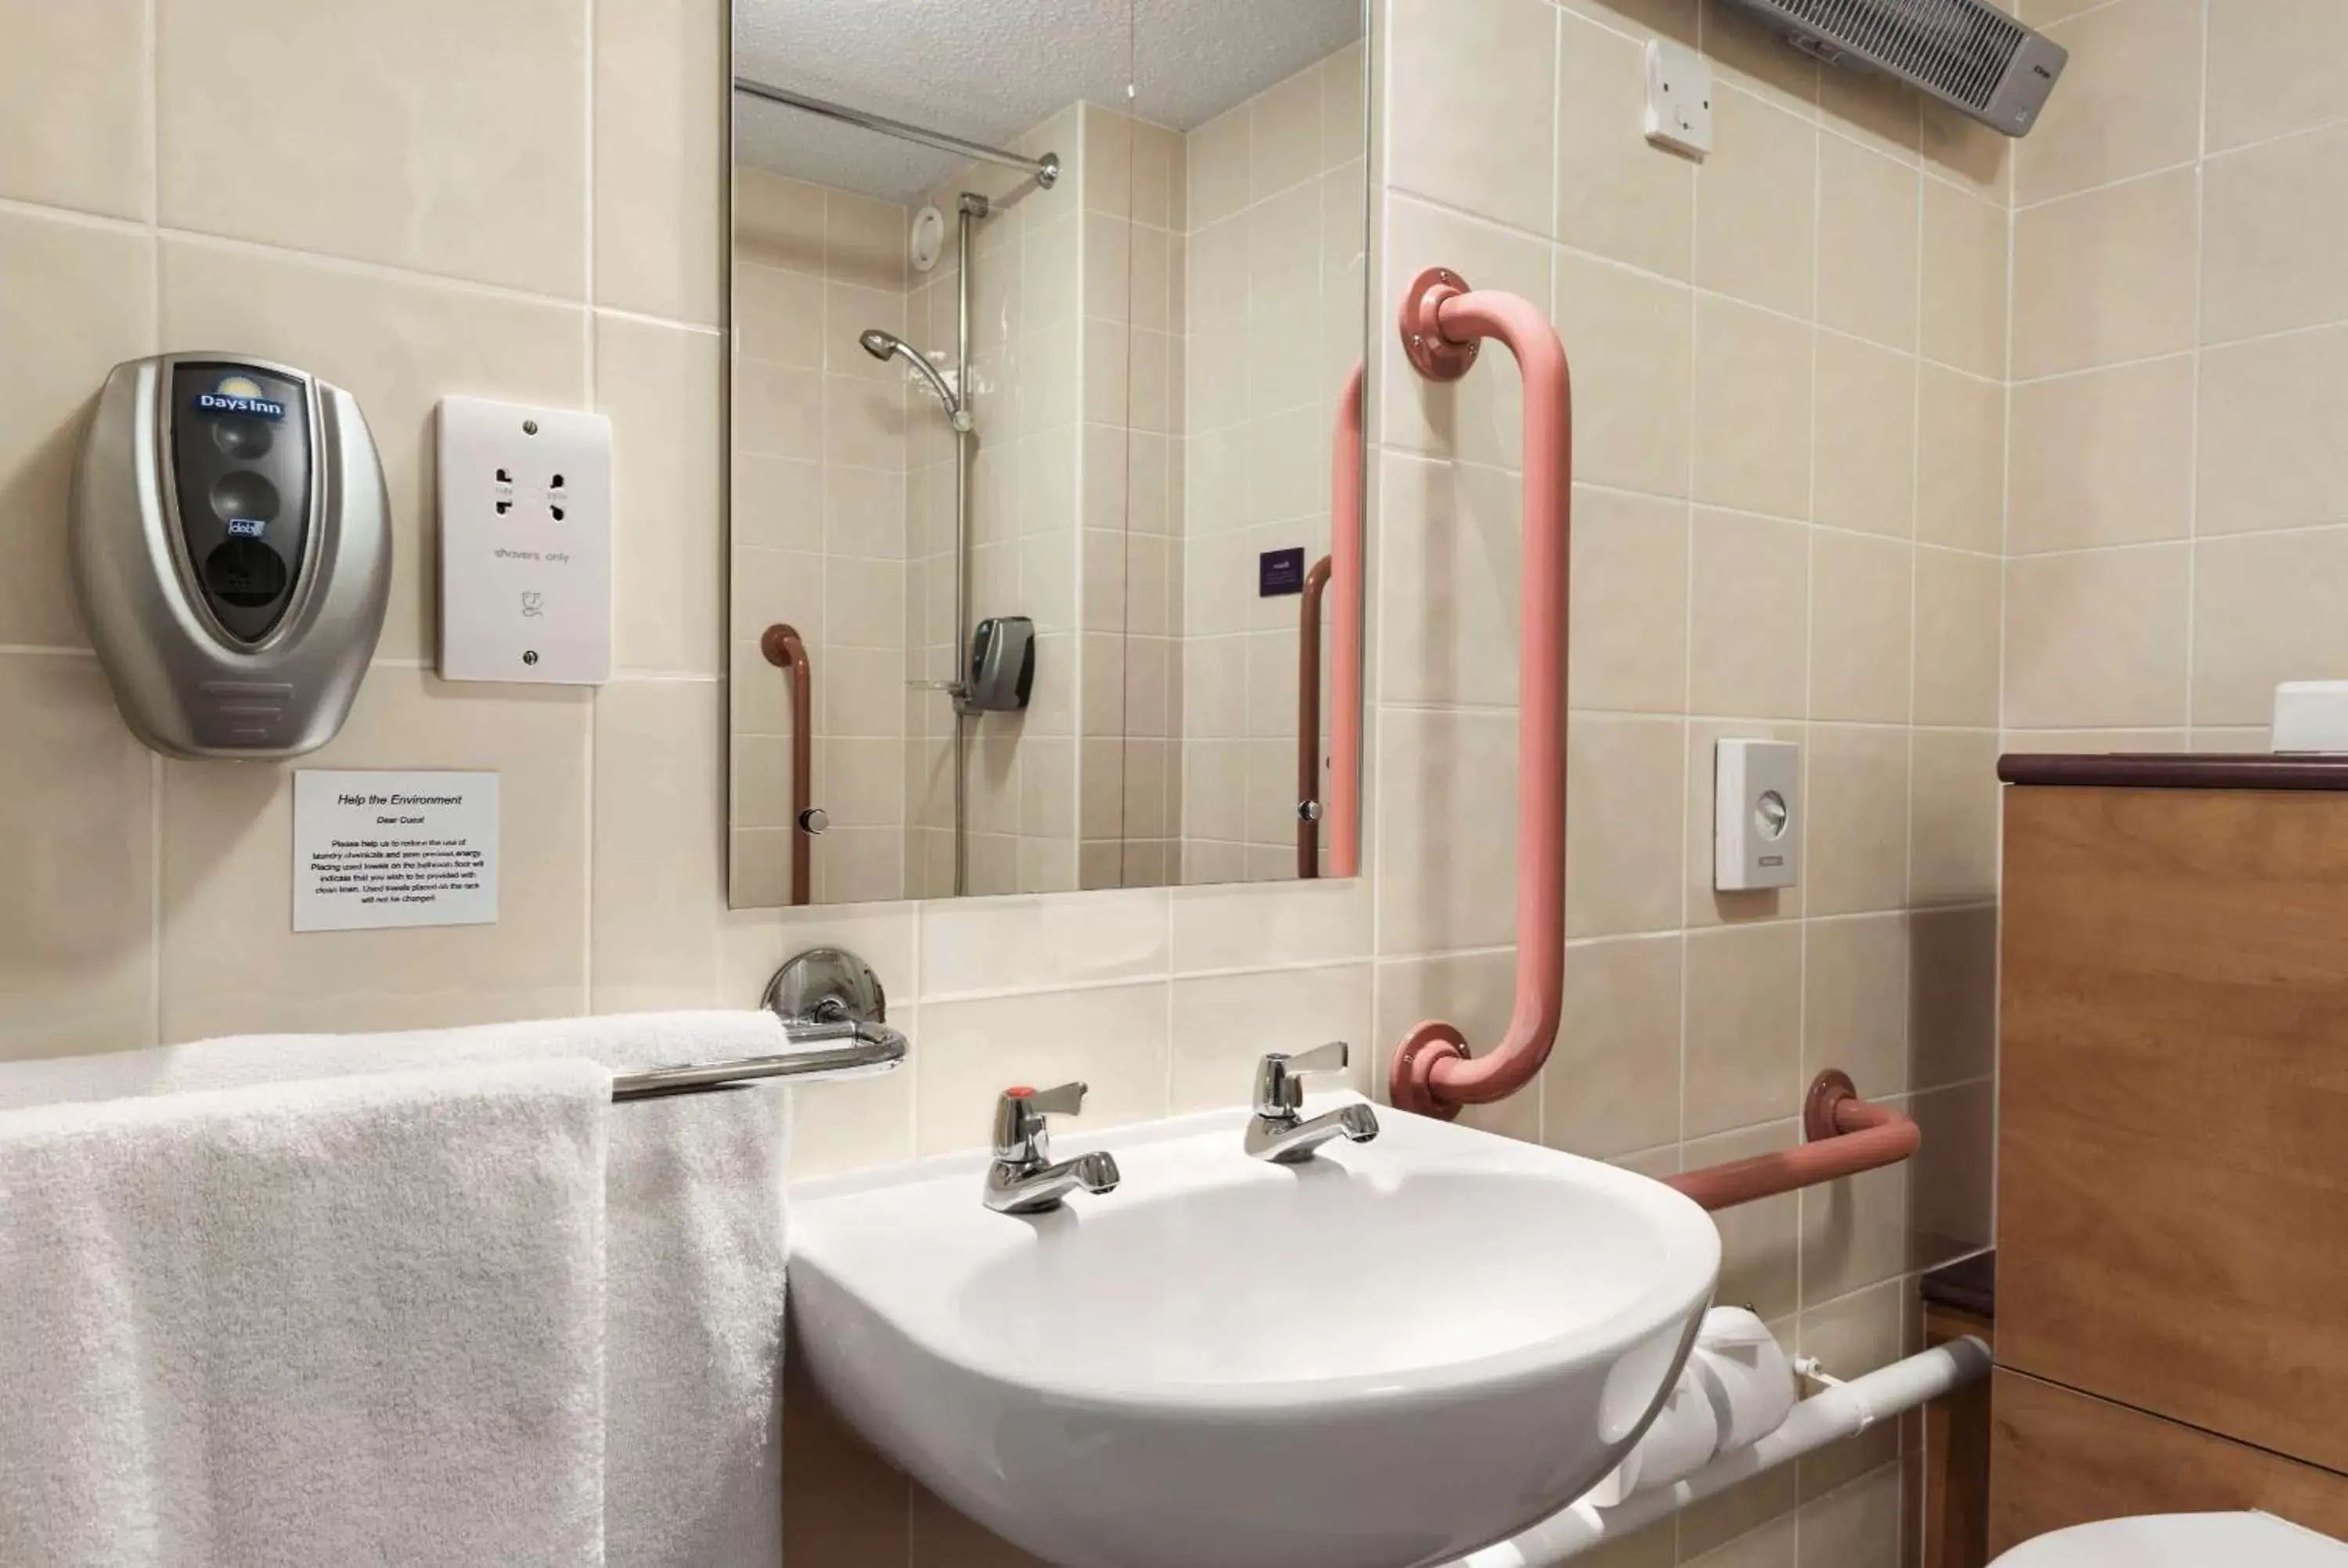 Bathroom in Days Inn Cannock - Norton Canes